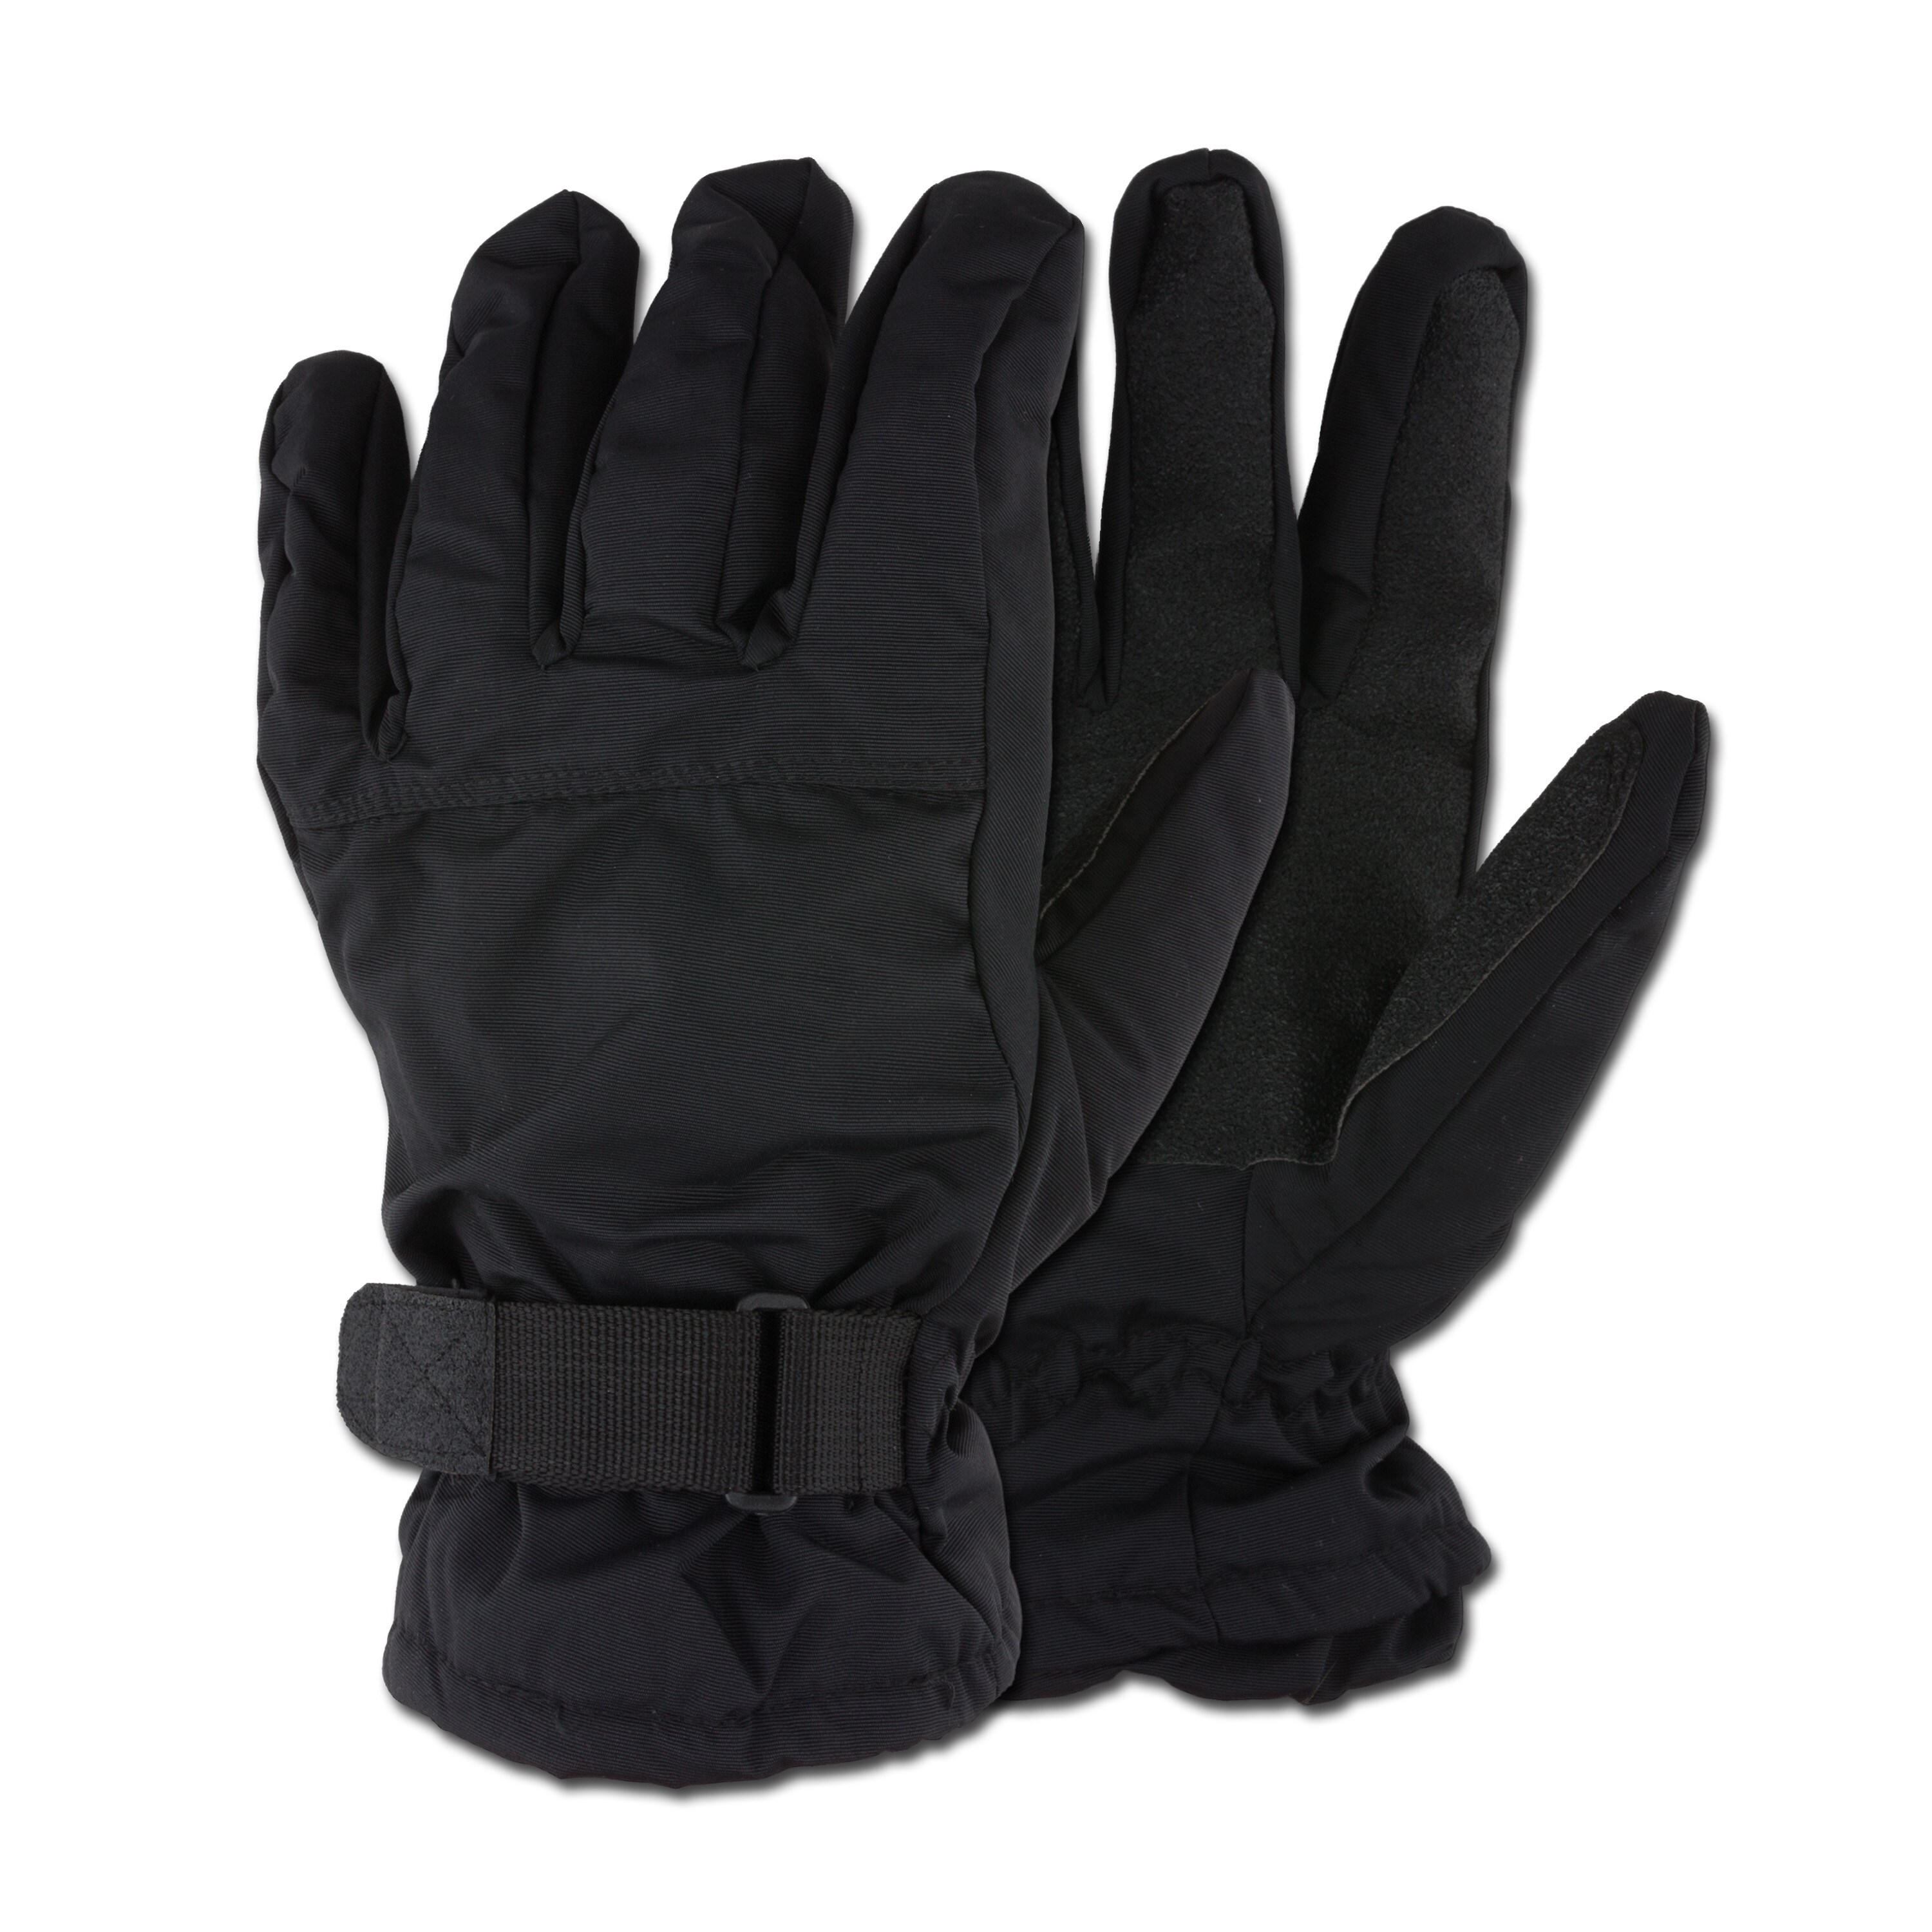 Gloves Highlander Mountain black | Gloves Highlander Mountain black ...